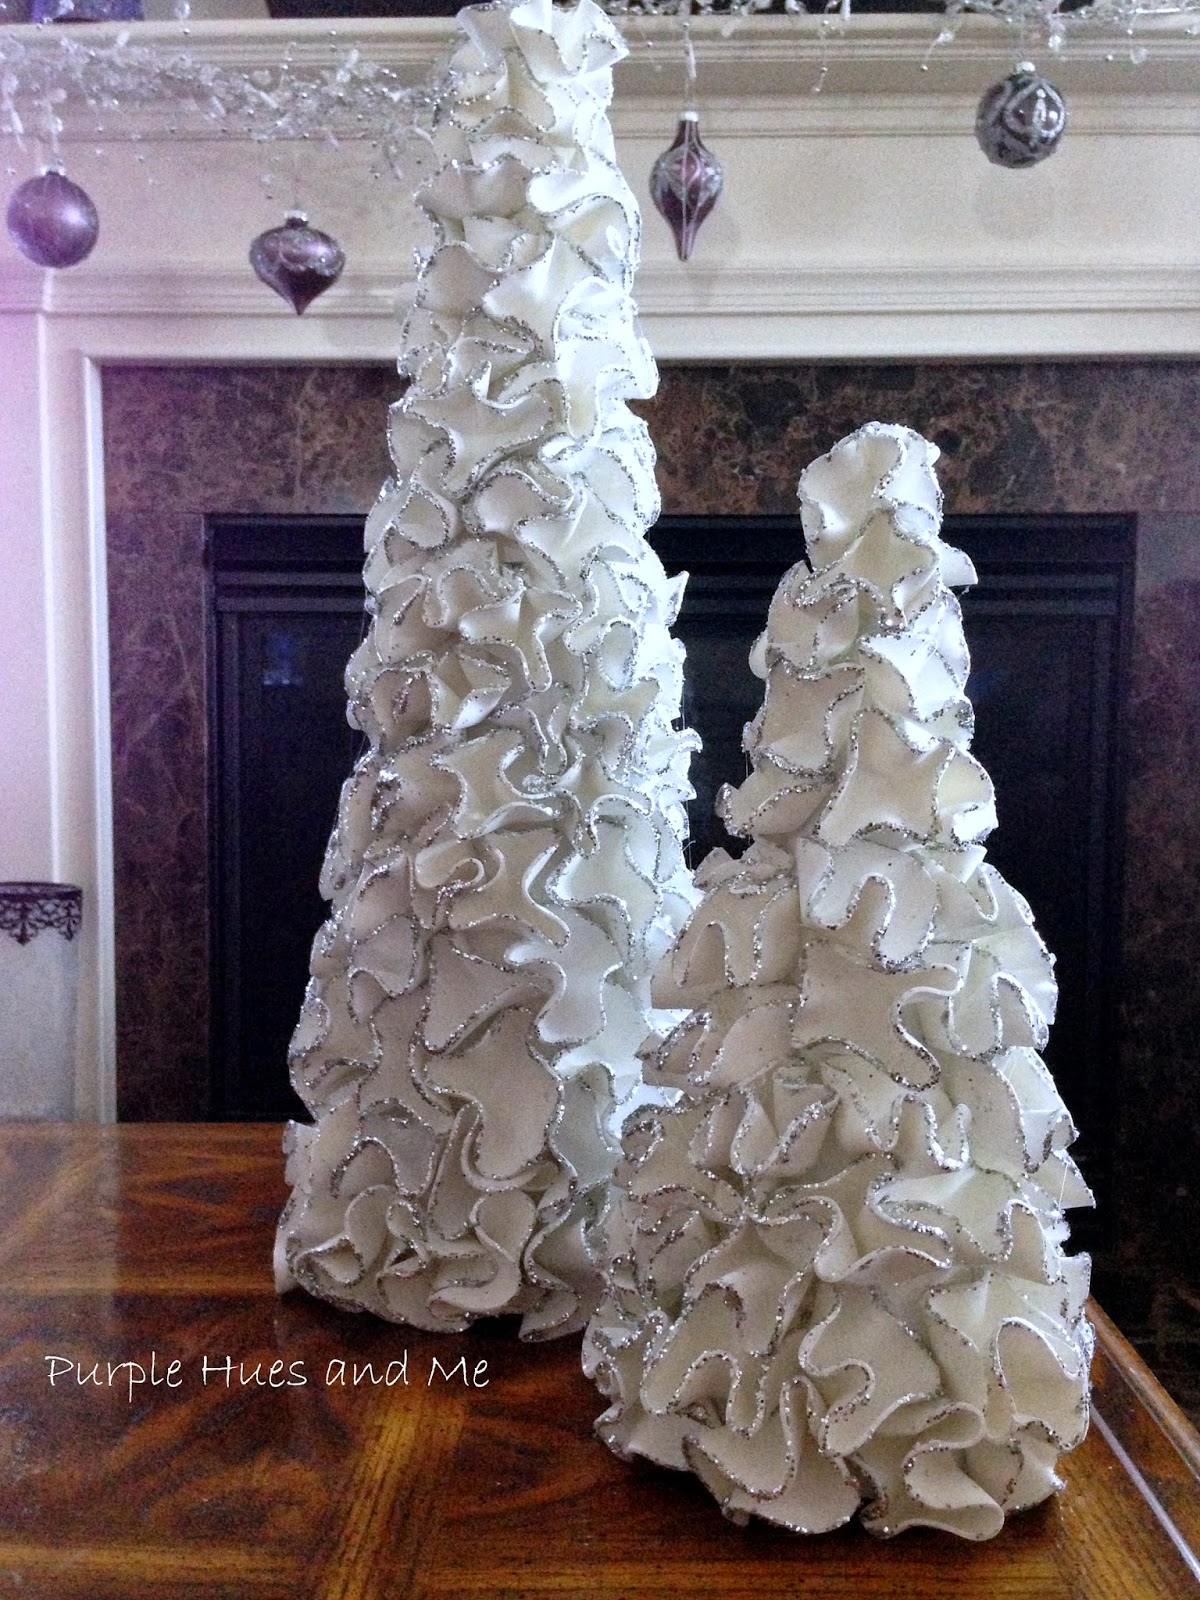 Styrofoam Cones - assorted sizes